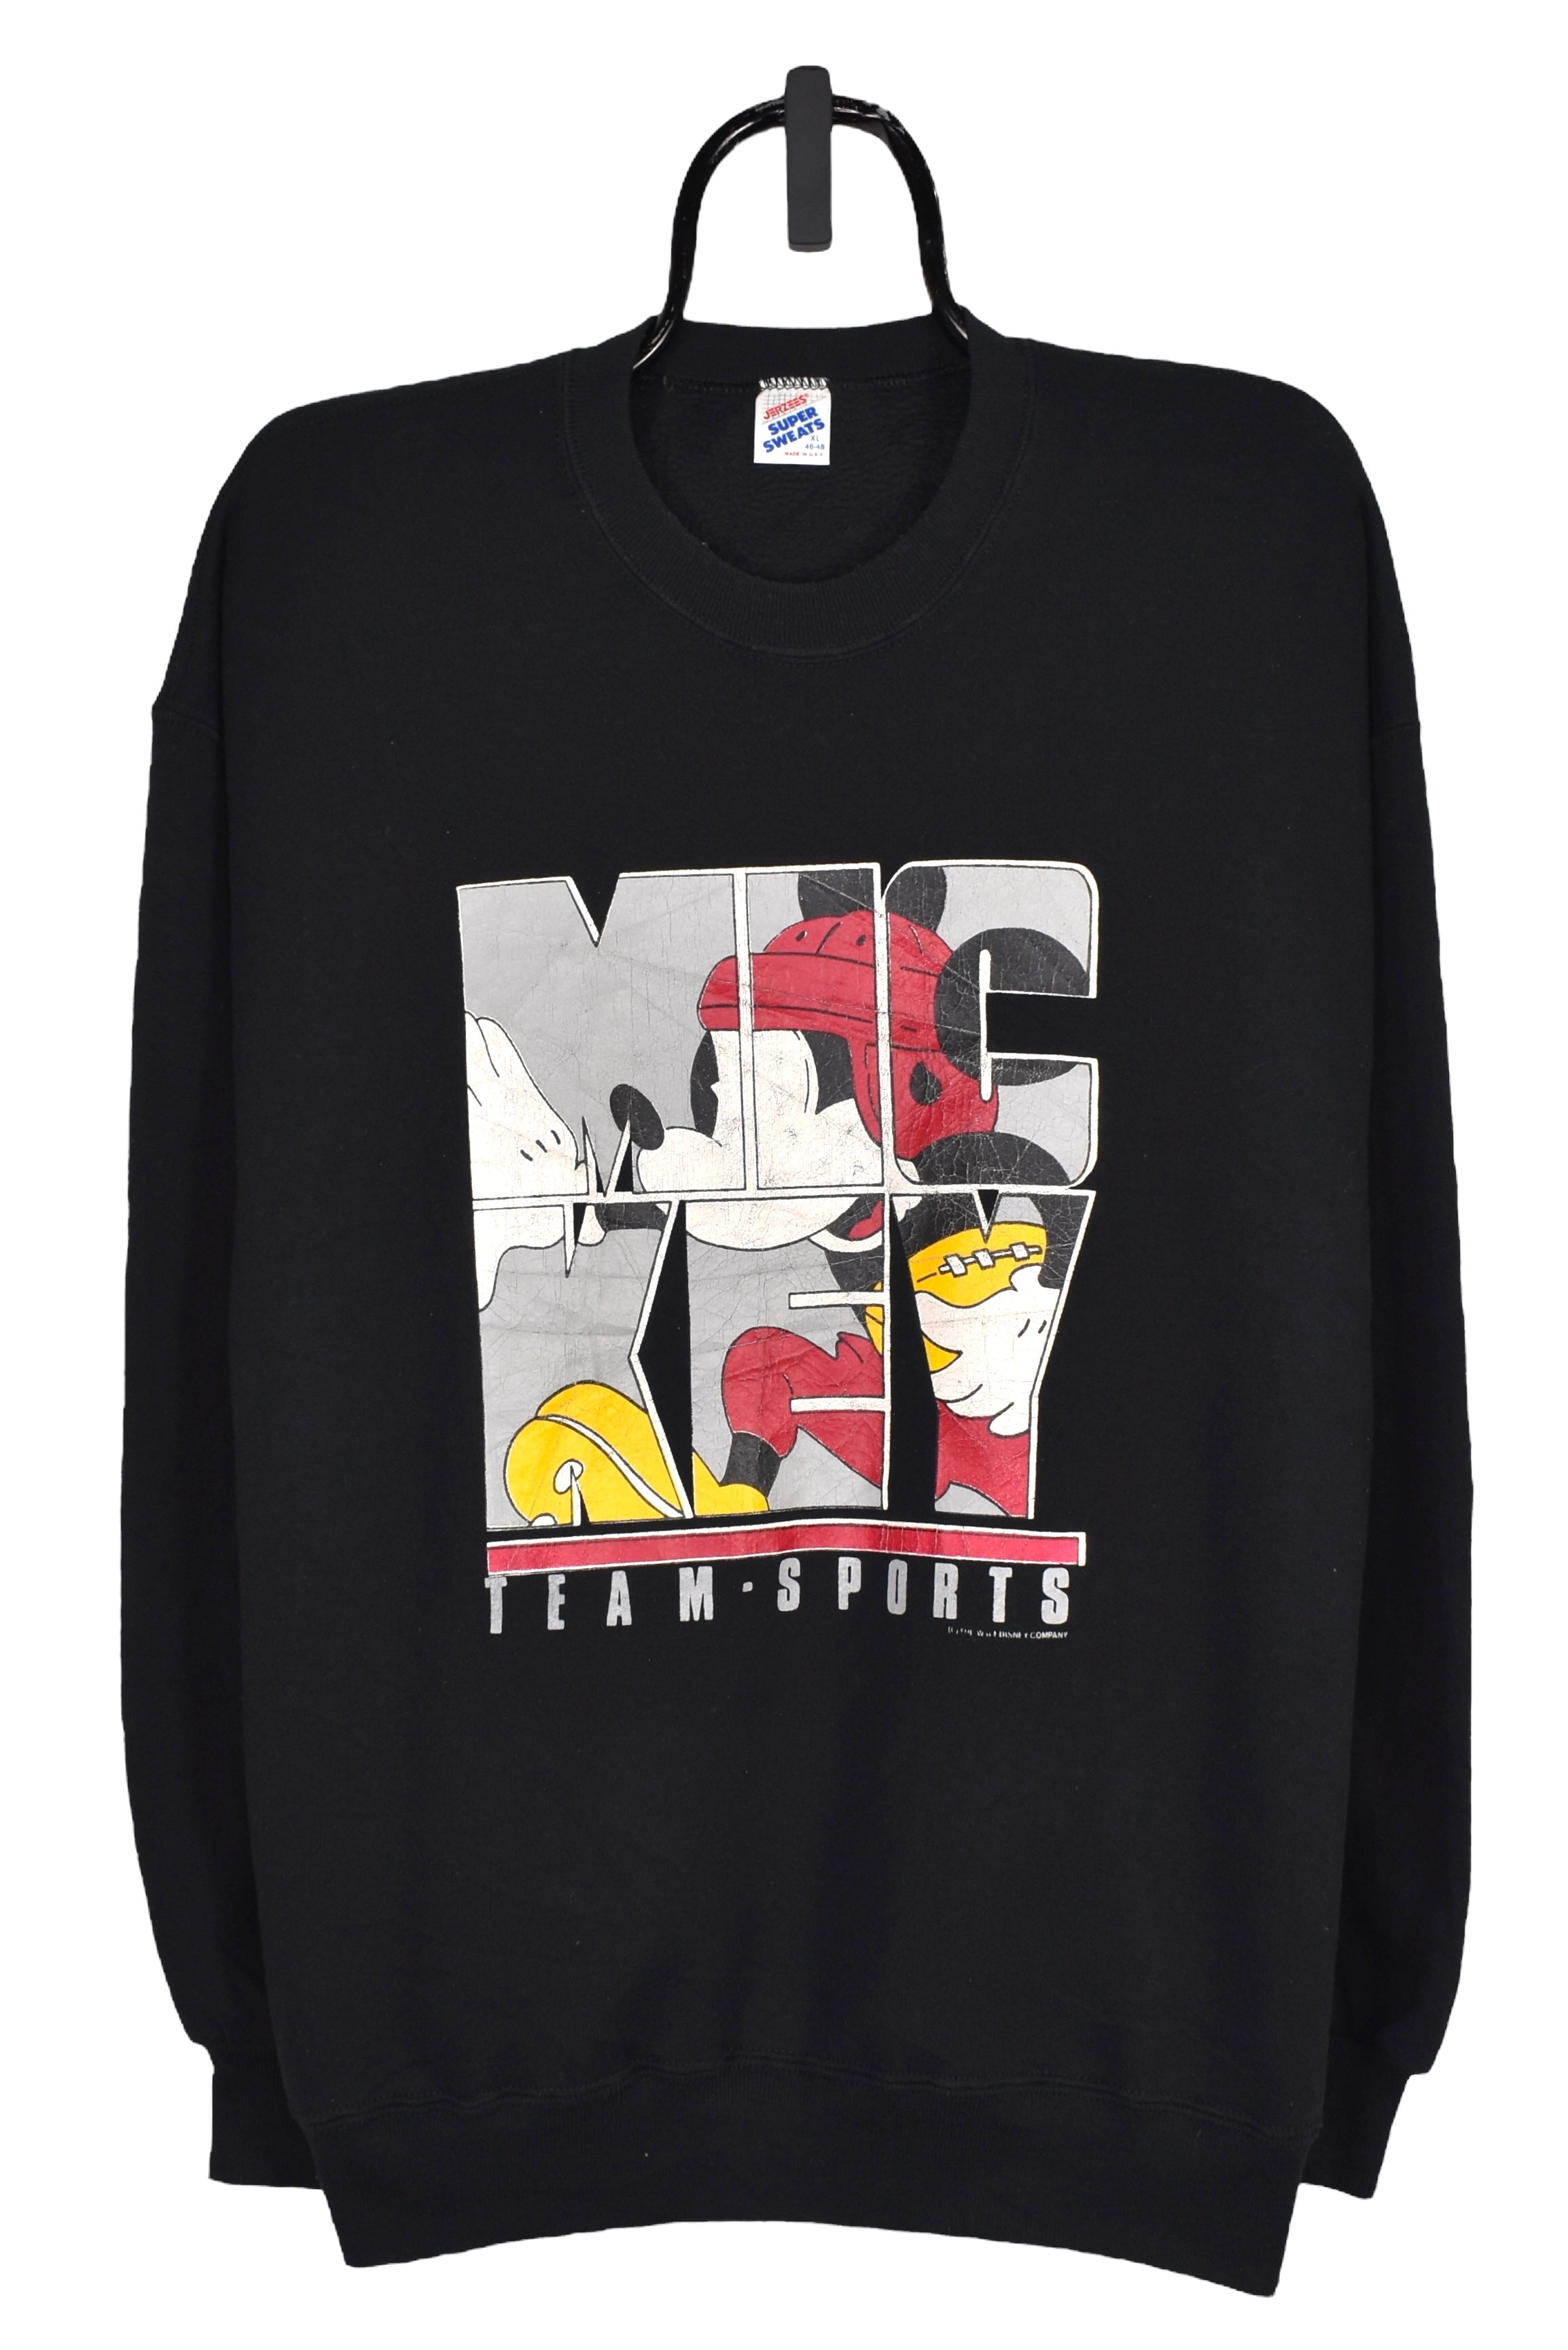 Vintage Mickey Mouse sweatshirt (L), black Disney graphic crewneck